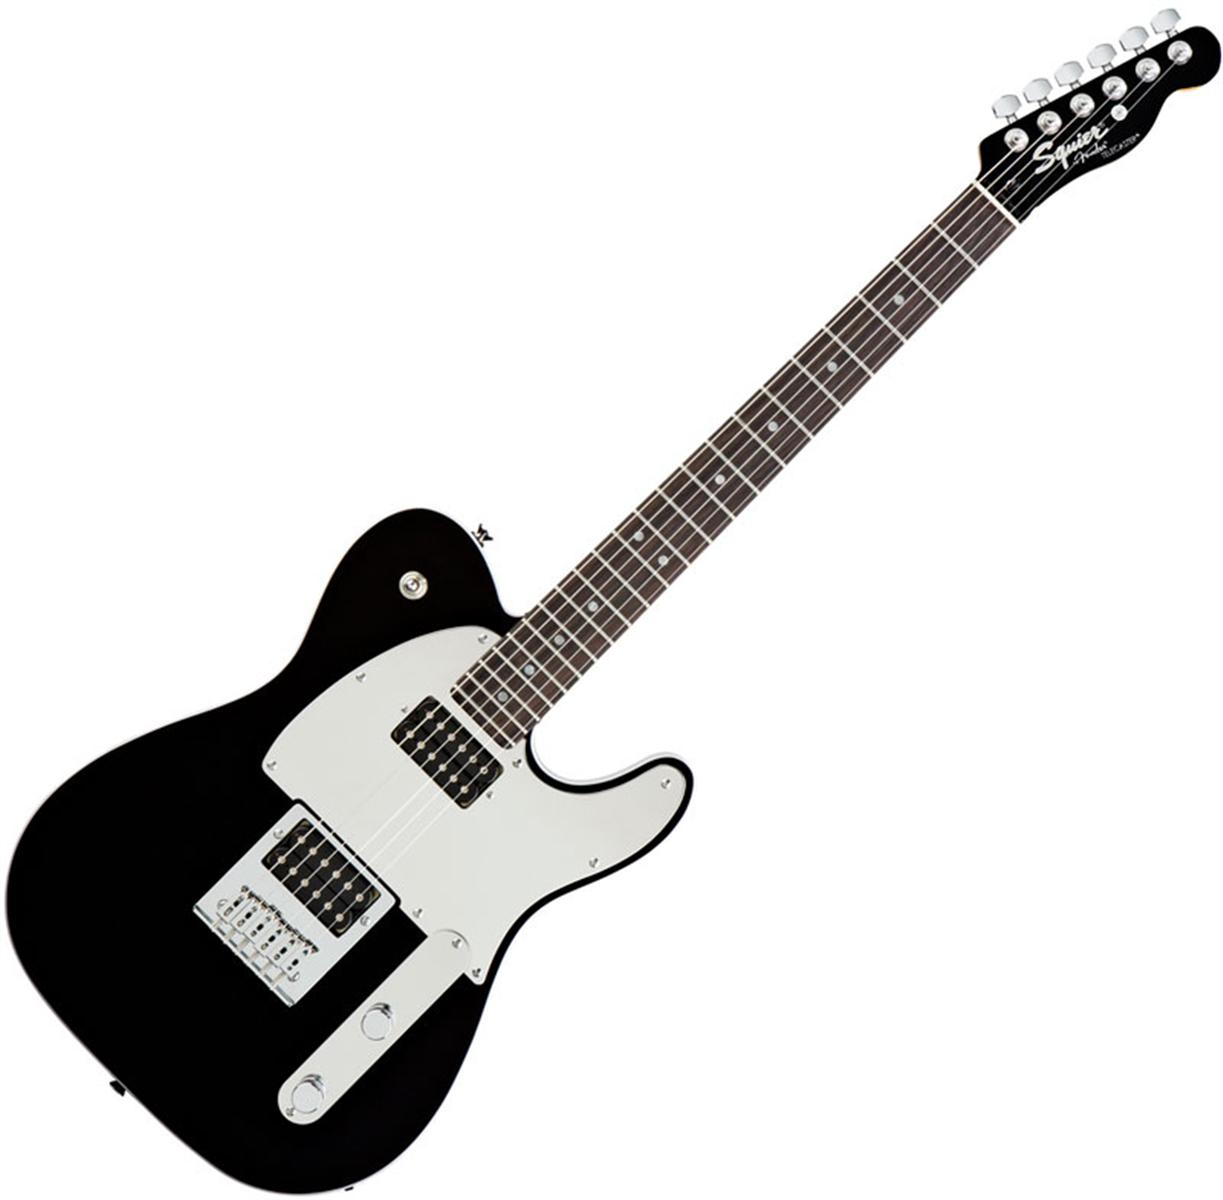 Electric Guitar11